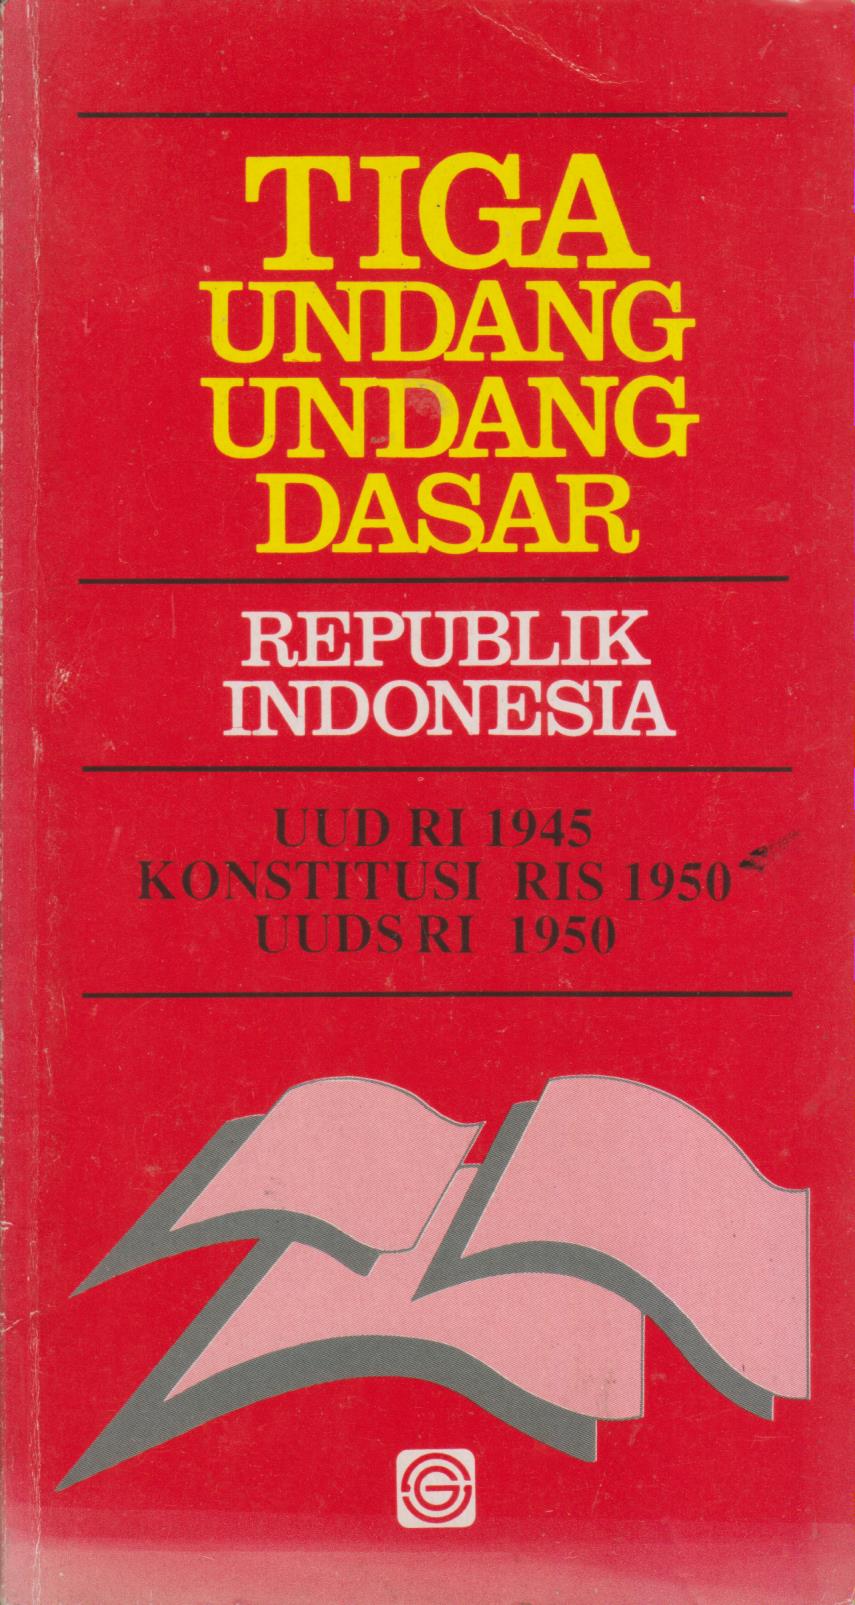 TIGA UNDANG-UNDANG DASAR REPUBLIK INDONESIA